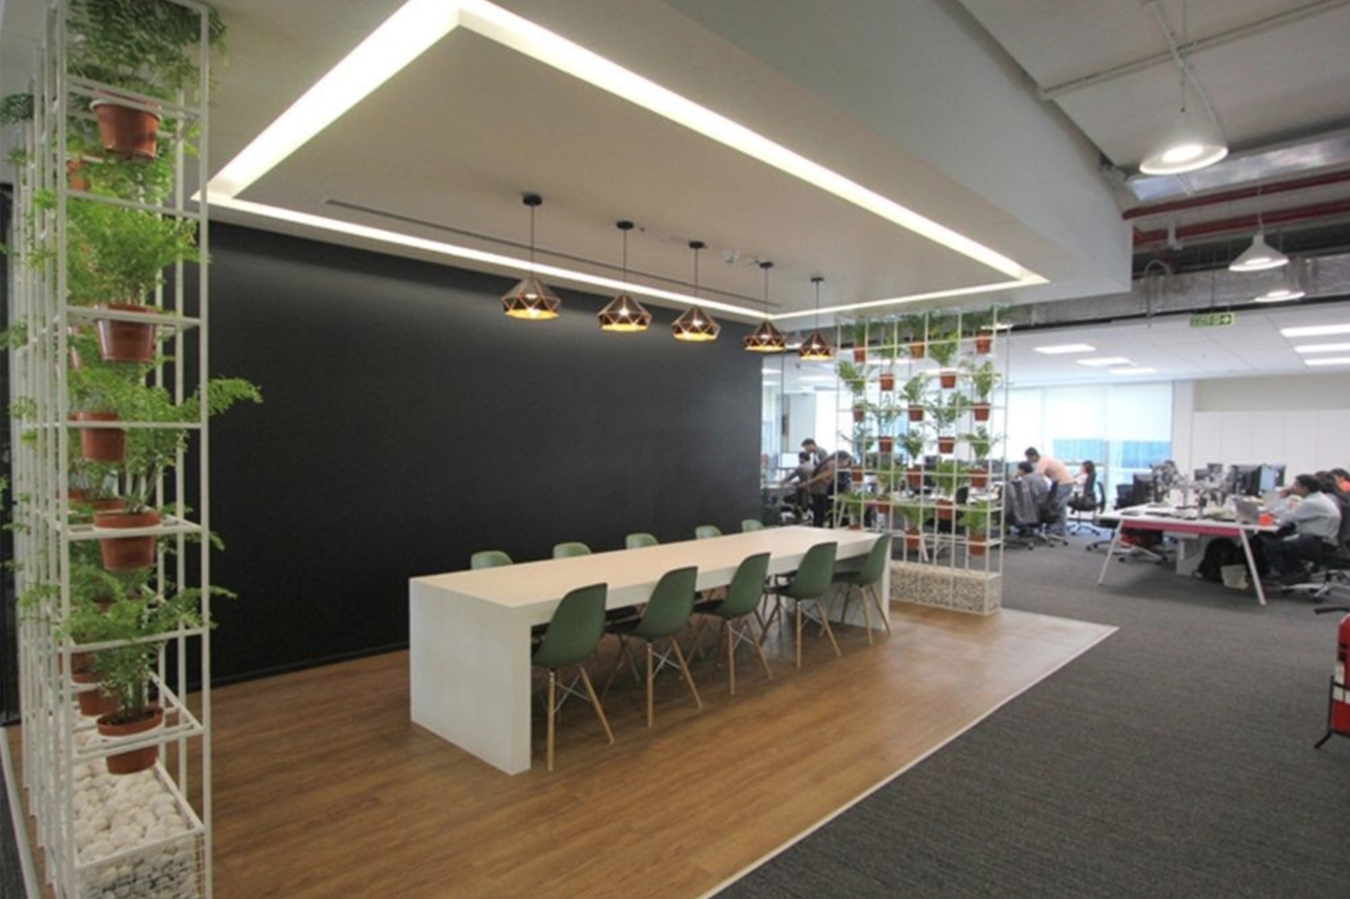 11 Office Interior Design Ideas For Inspiration Avanti Systems – Winder